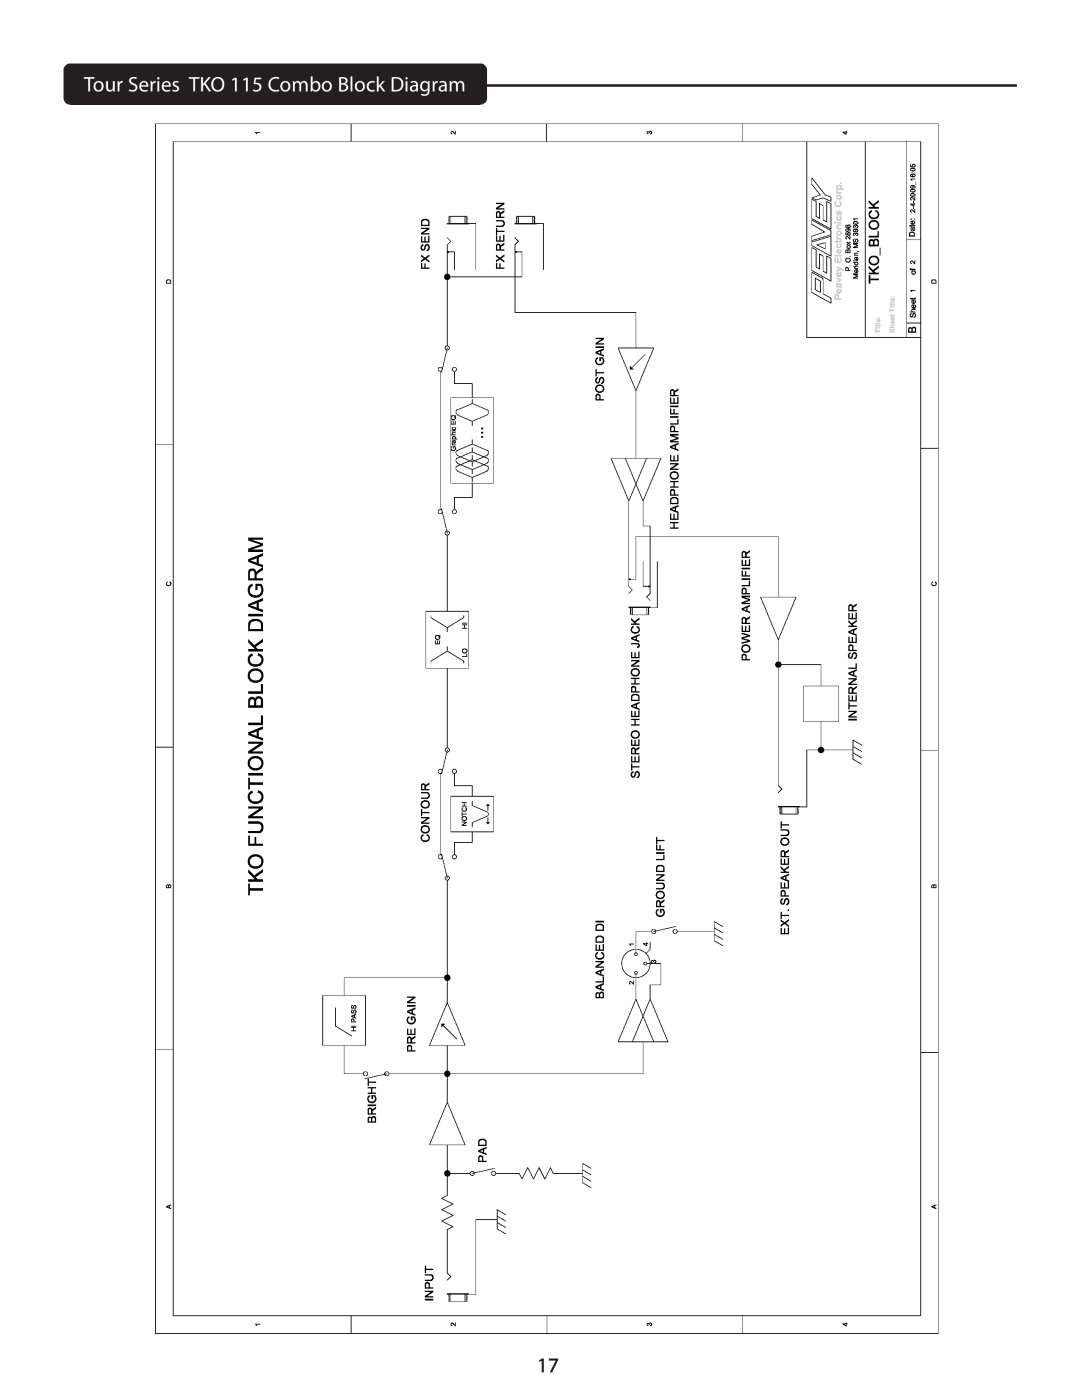 Peavey TNT manual Tko Functional Block Diagram, Combo, Series TKO, Tour, Tkoblock 